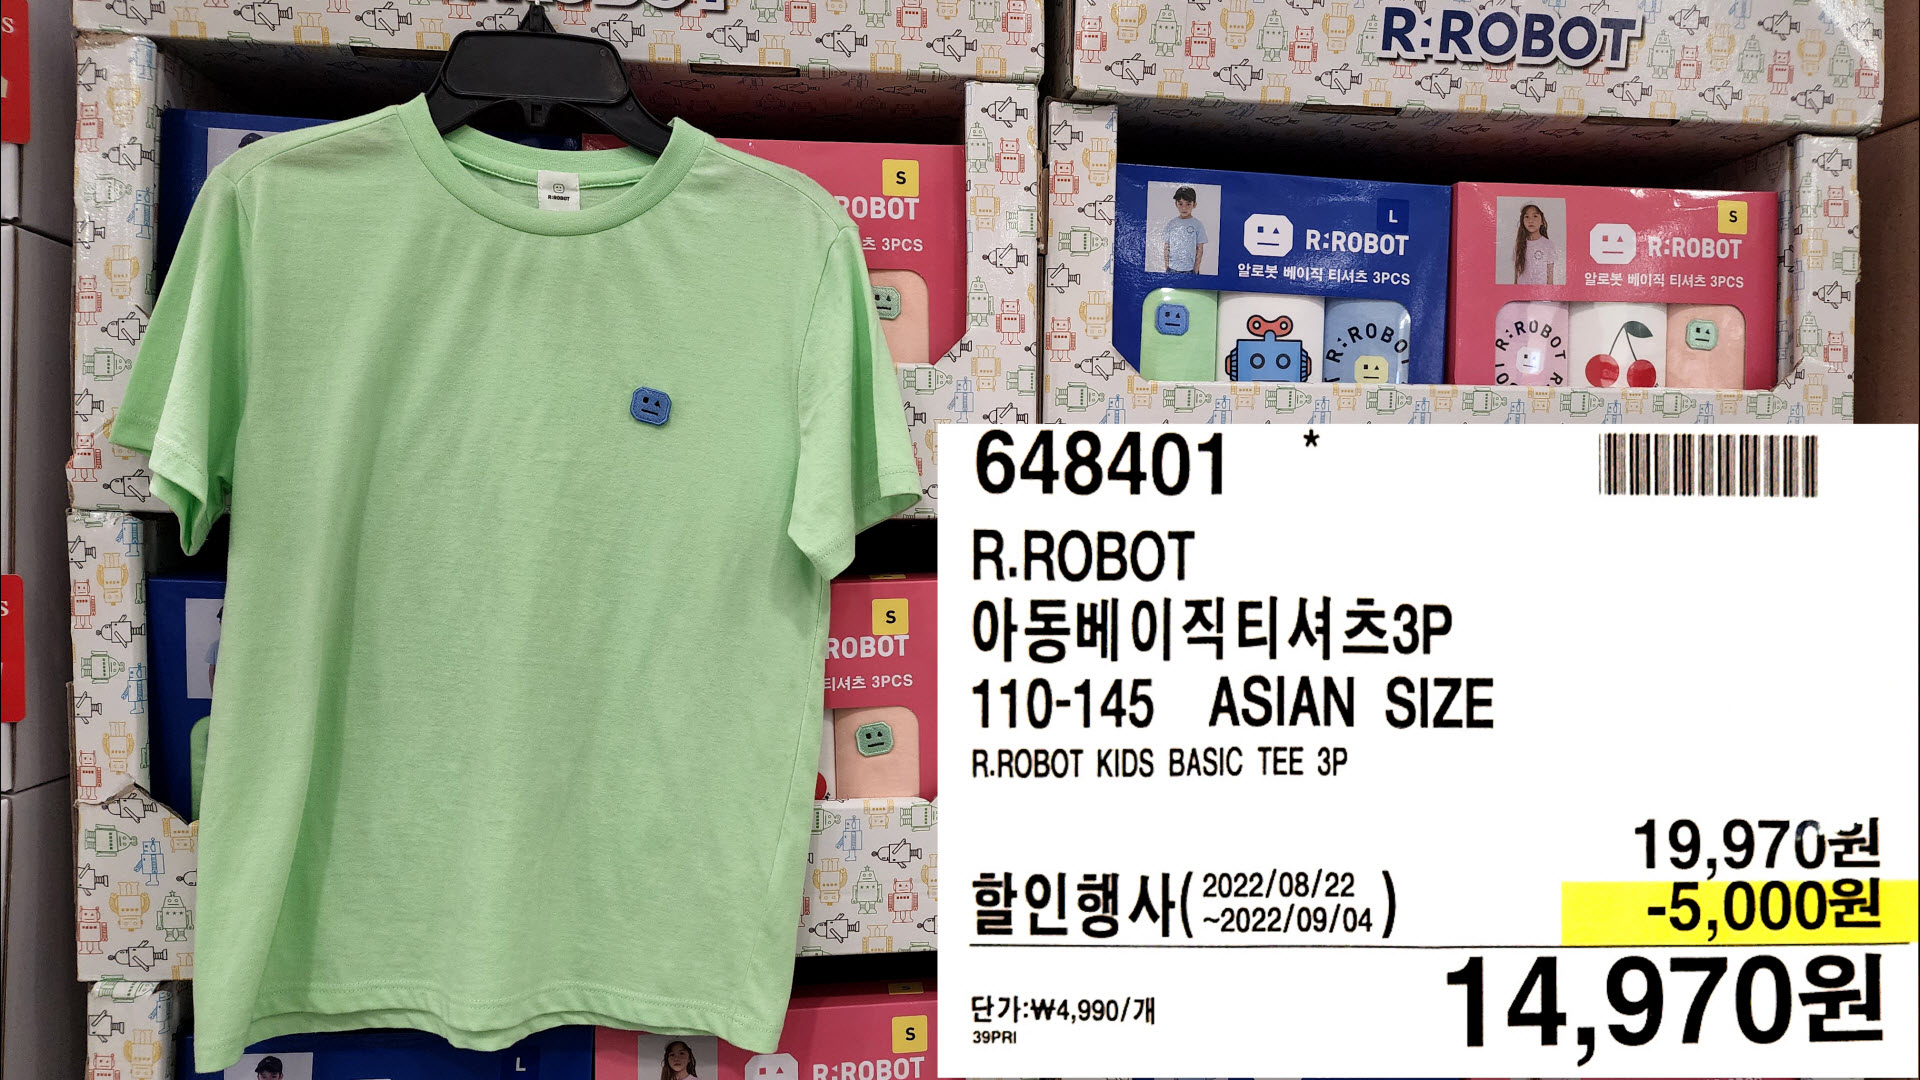 R.ROBOT
아동베이직티셔츠3P
110-145 ASIAN SIZE
R.ROBOT KIDS BASIC TEE 3P
14,970원